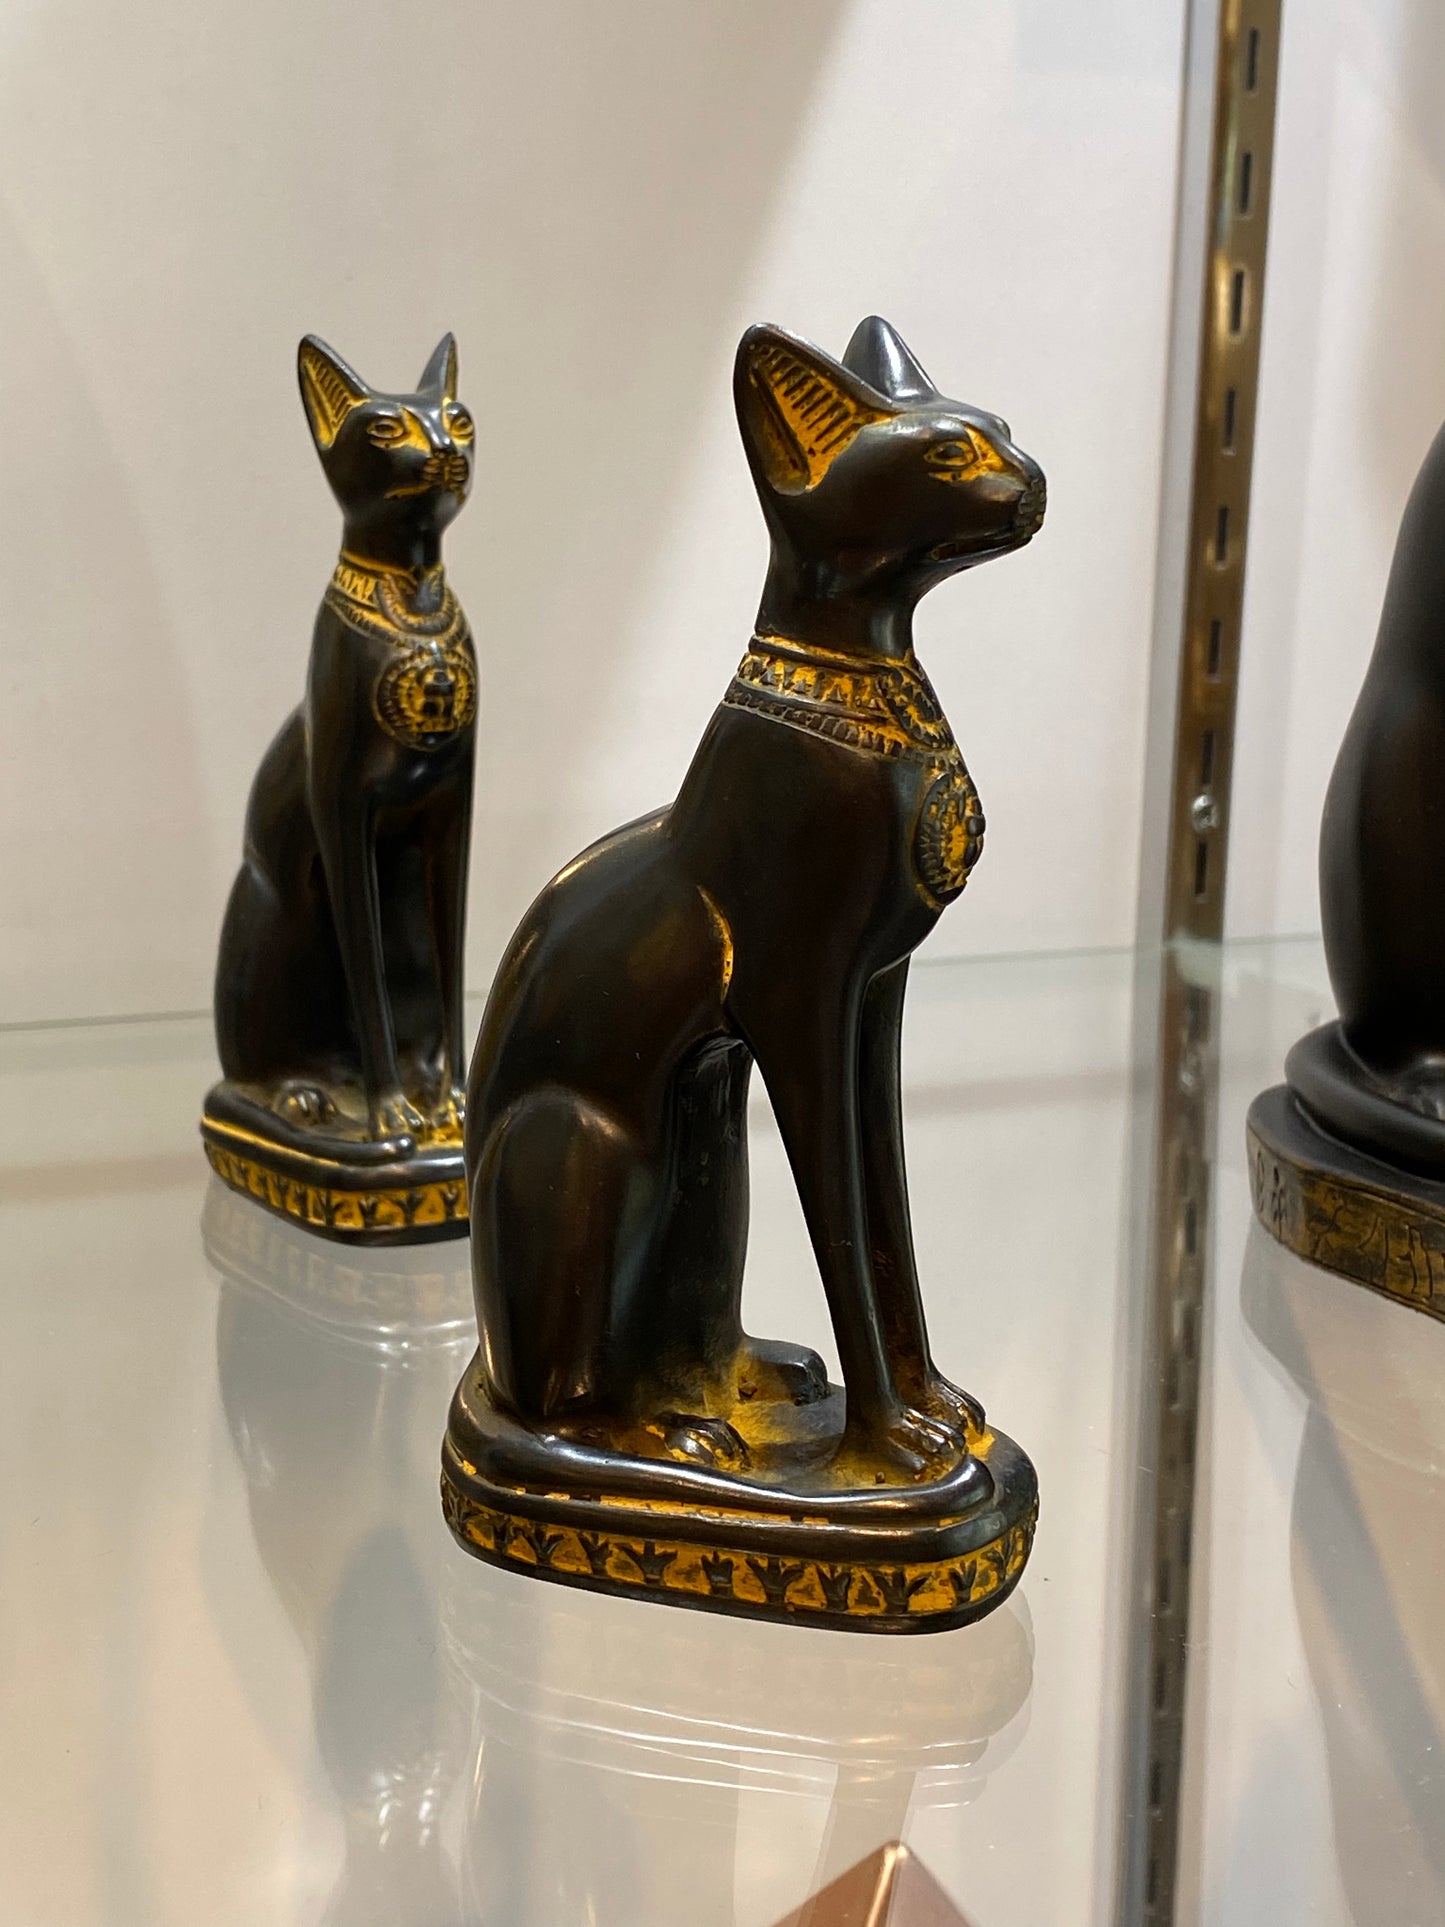 Fine Bastet Cat Antique Gold - 6"